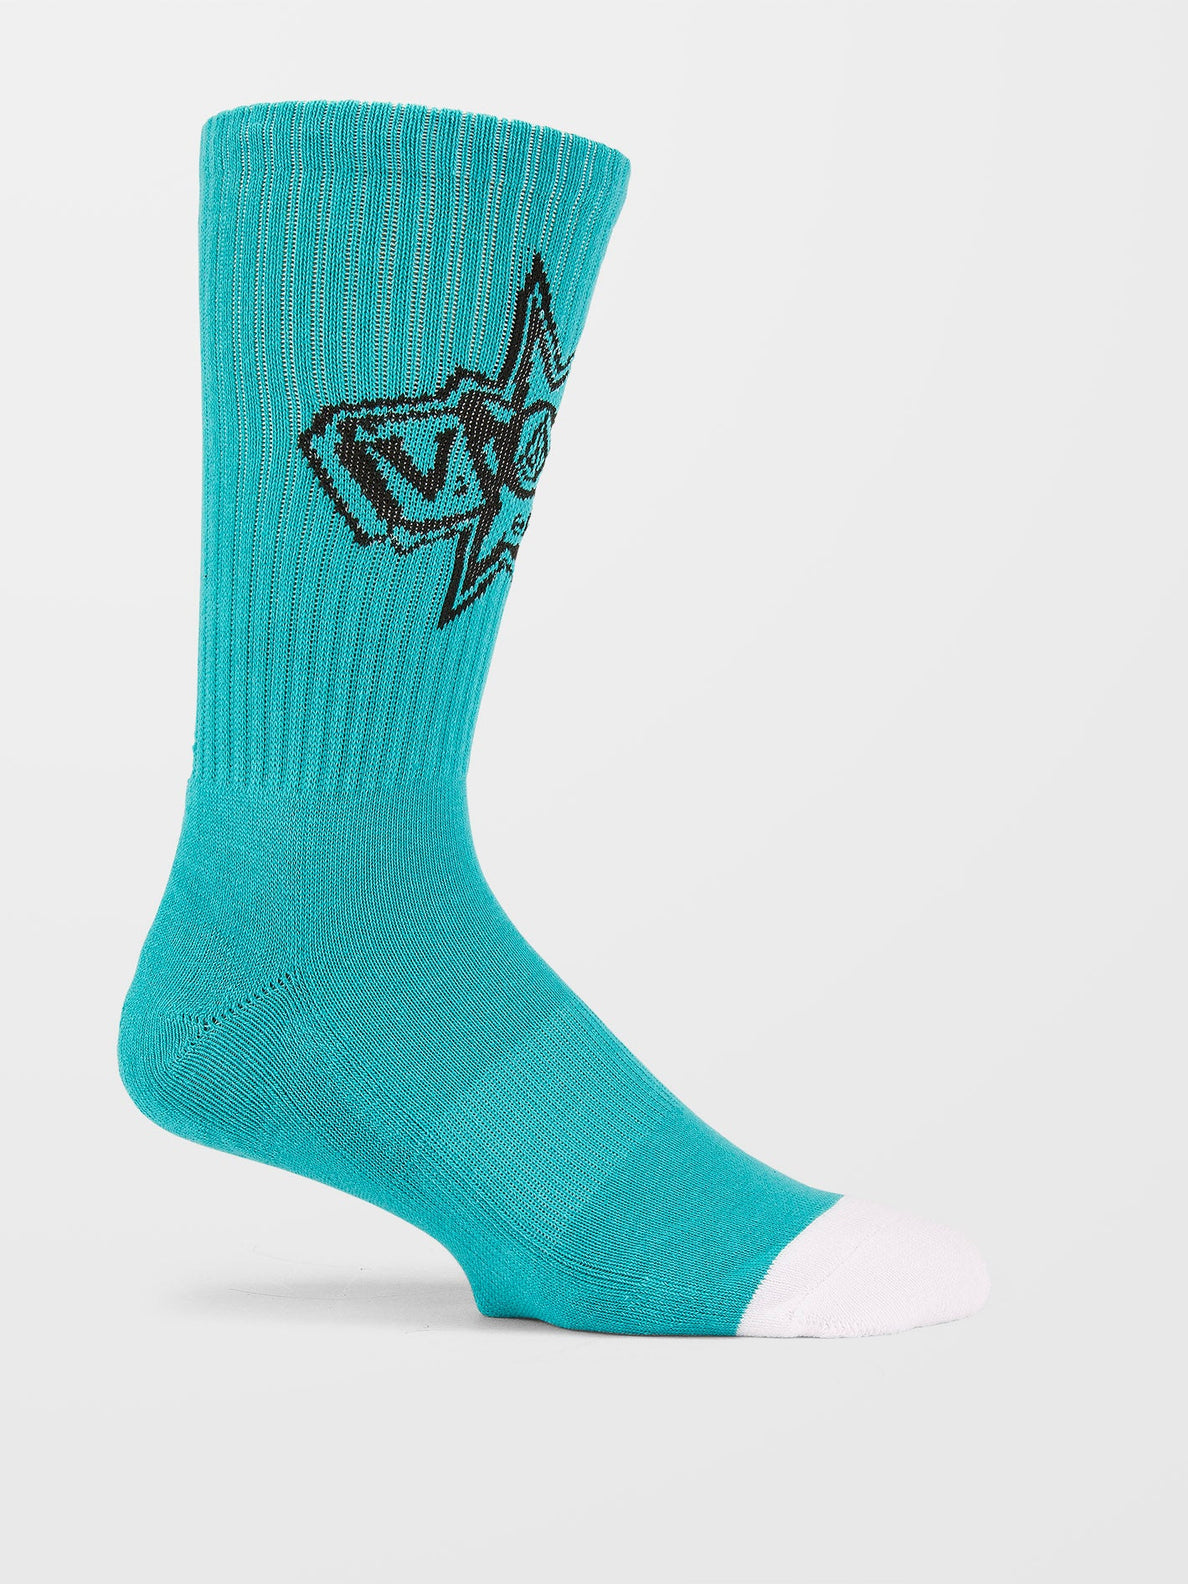 Volcom V Ent Sock Premium Temple Sarcelle